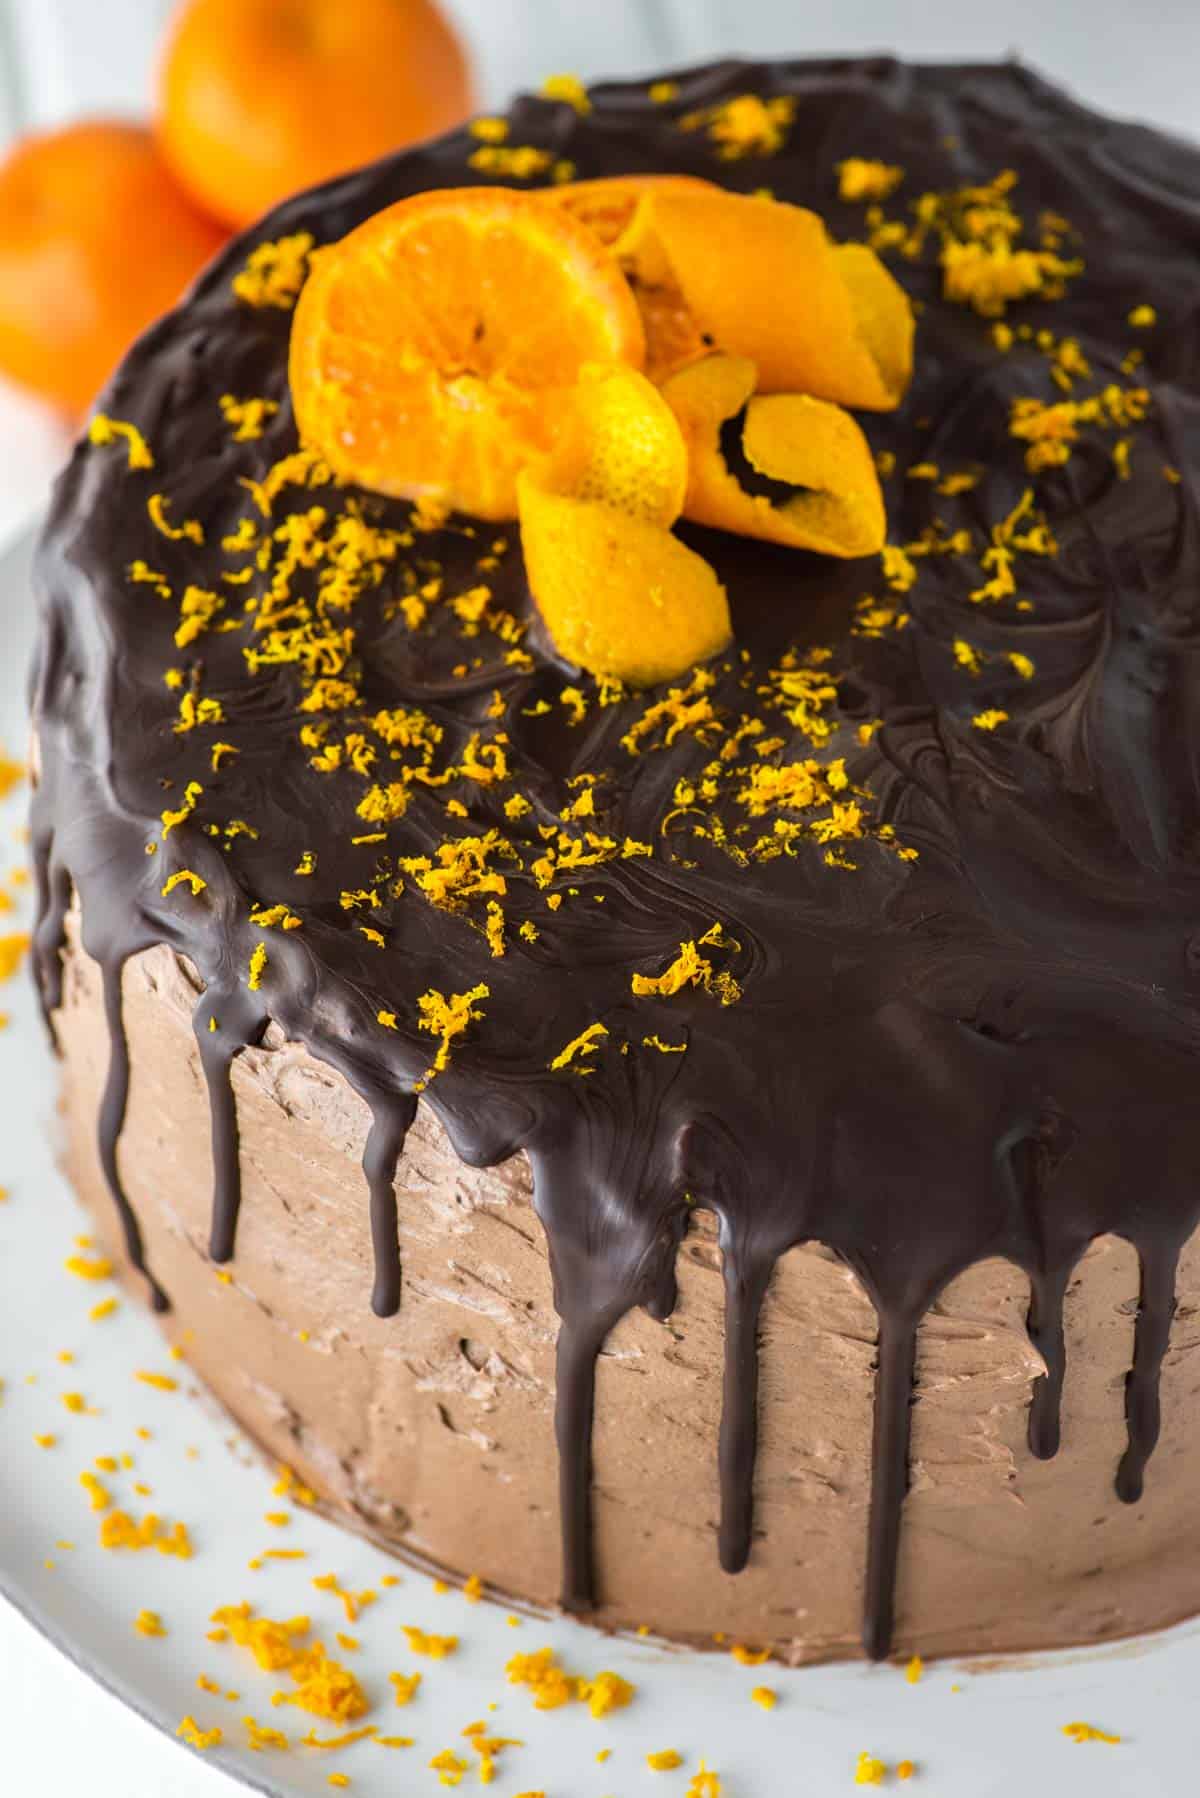 Easy Chocolate Orange Cake - Wholesome Patisserie